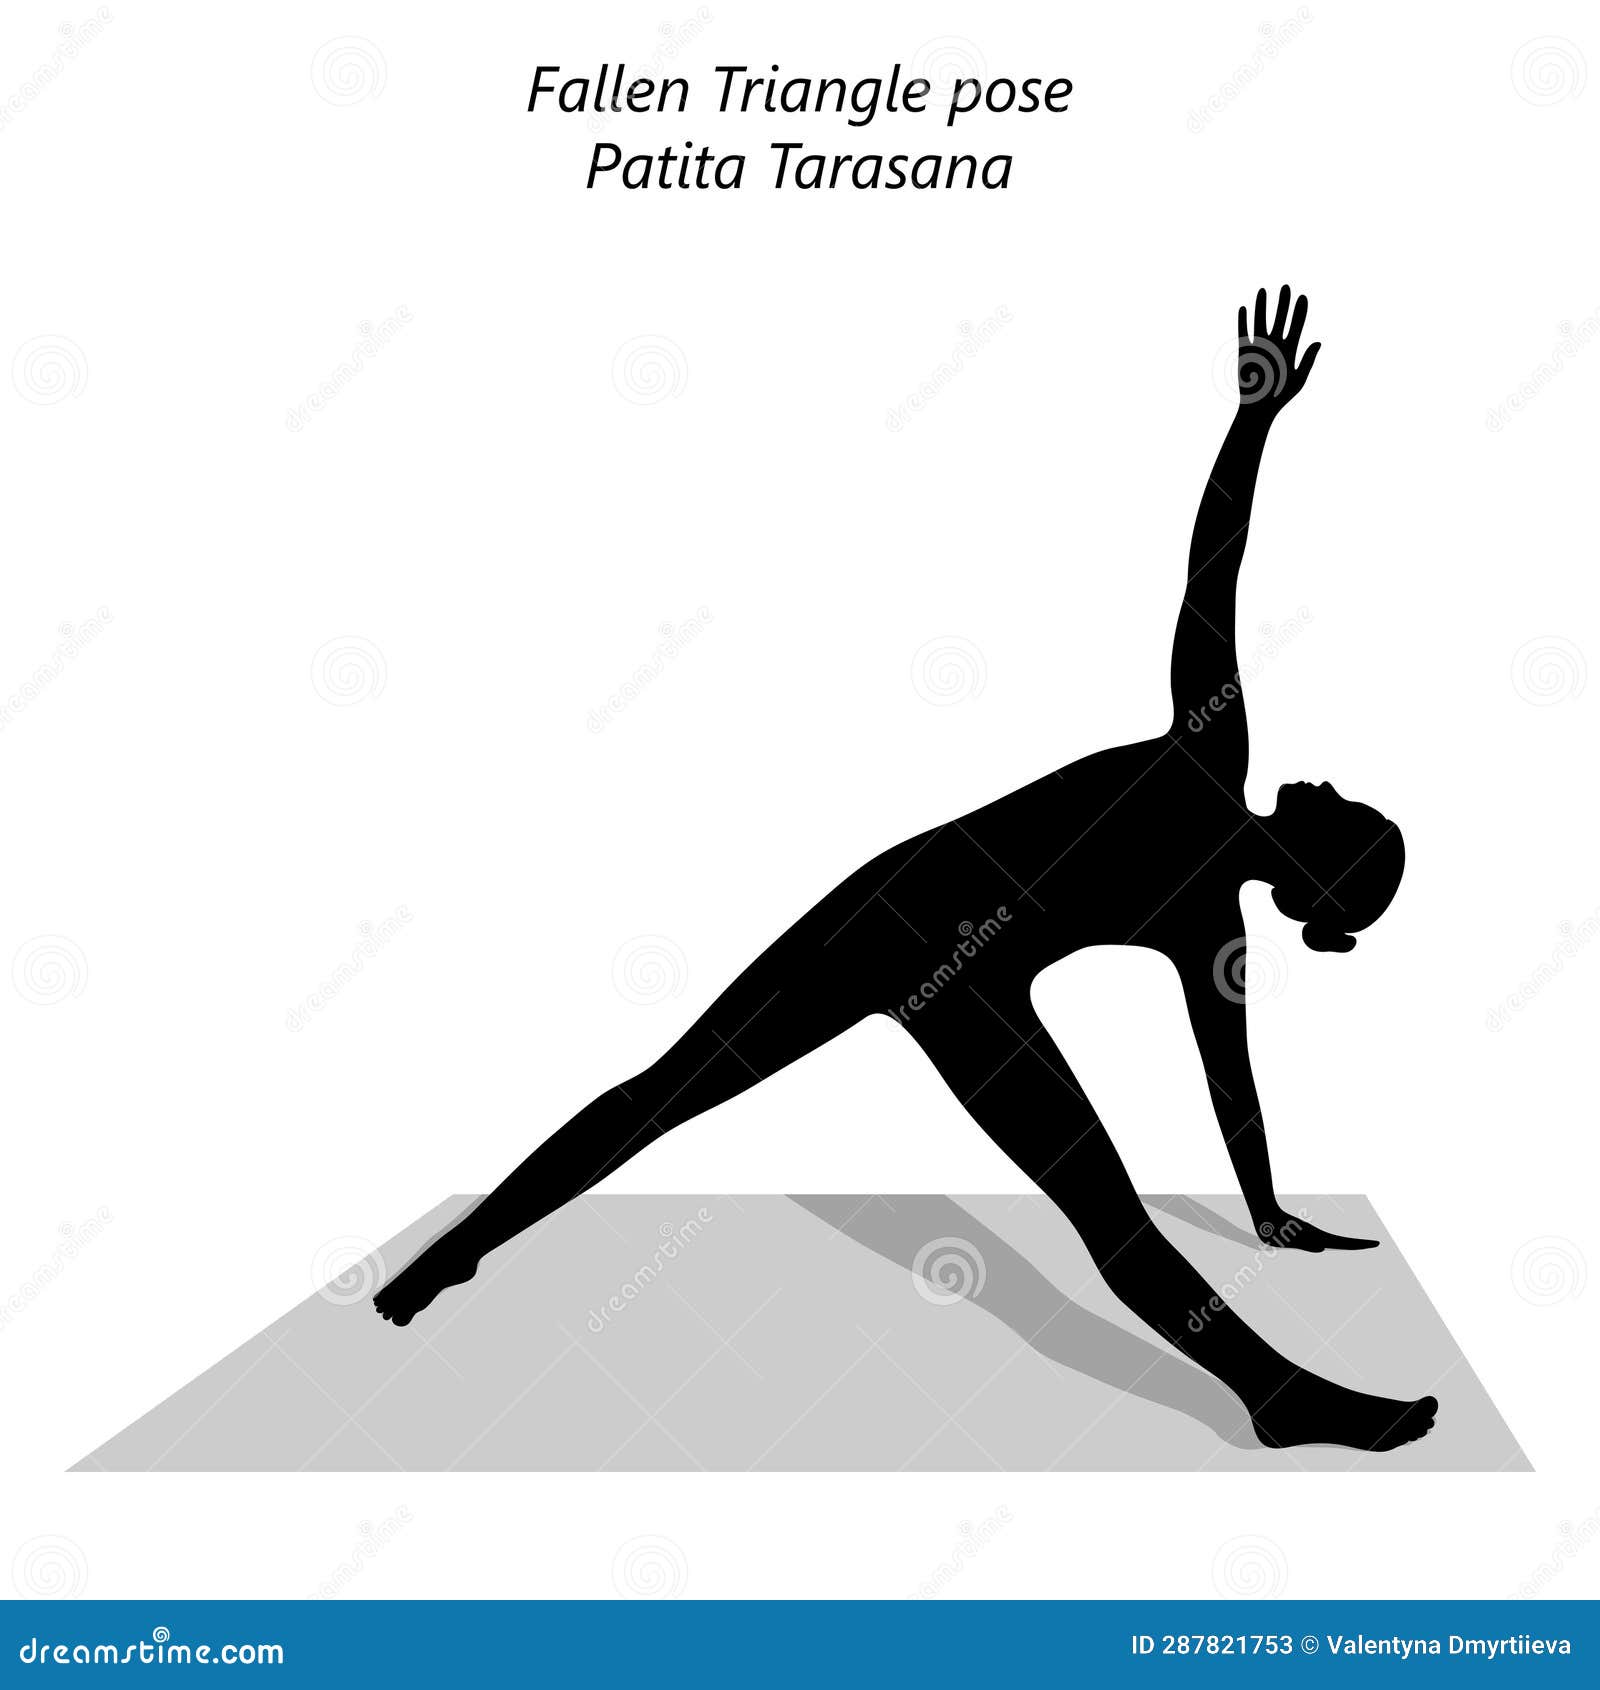 silhouette young woman practicing yoga doing fallen triangle pose fallen star pose patita tarasana arm leg support 287821753